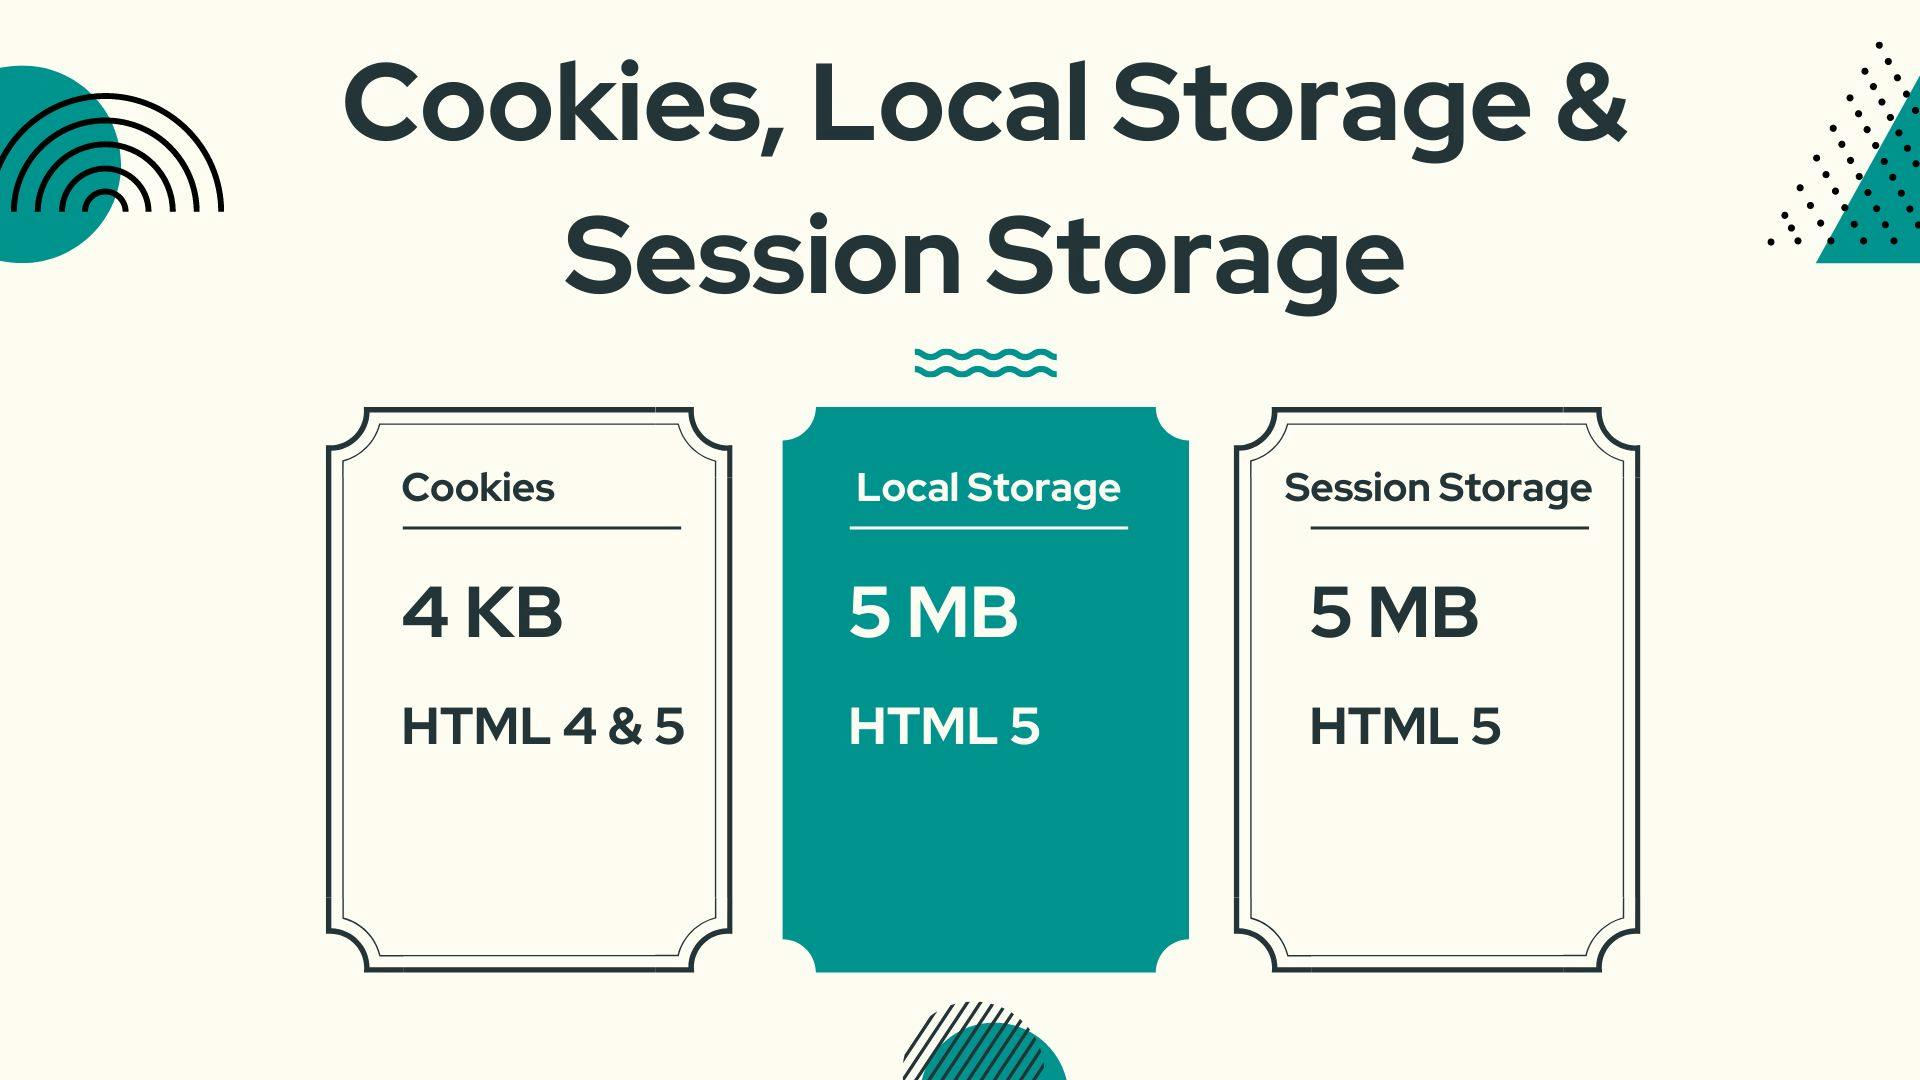 Cookies, Local Storage & Session Storage